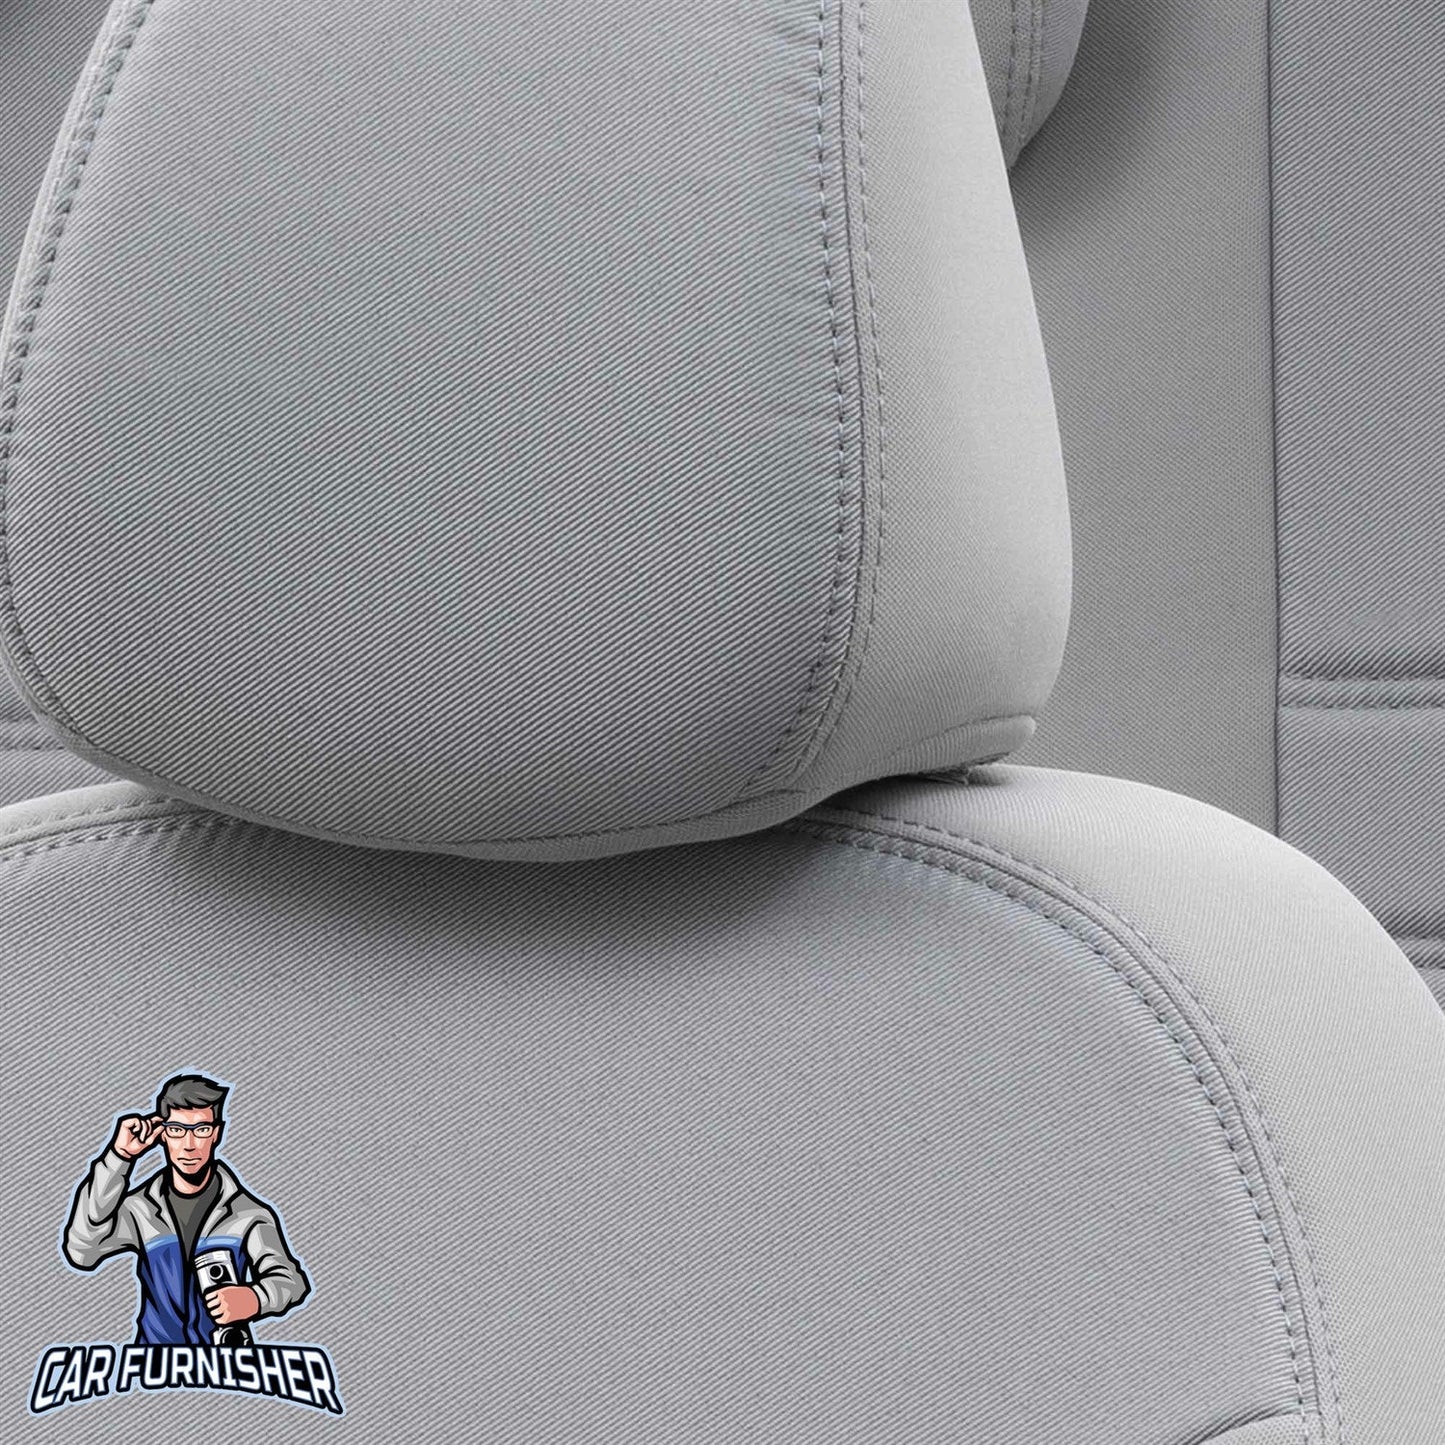 Volvo S80 Seat Cover Original Jacquard Design Light Gray Jacquard Fabric